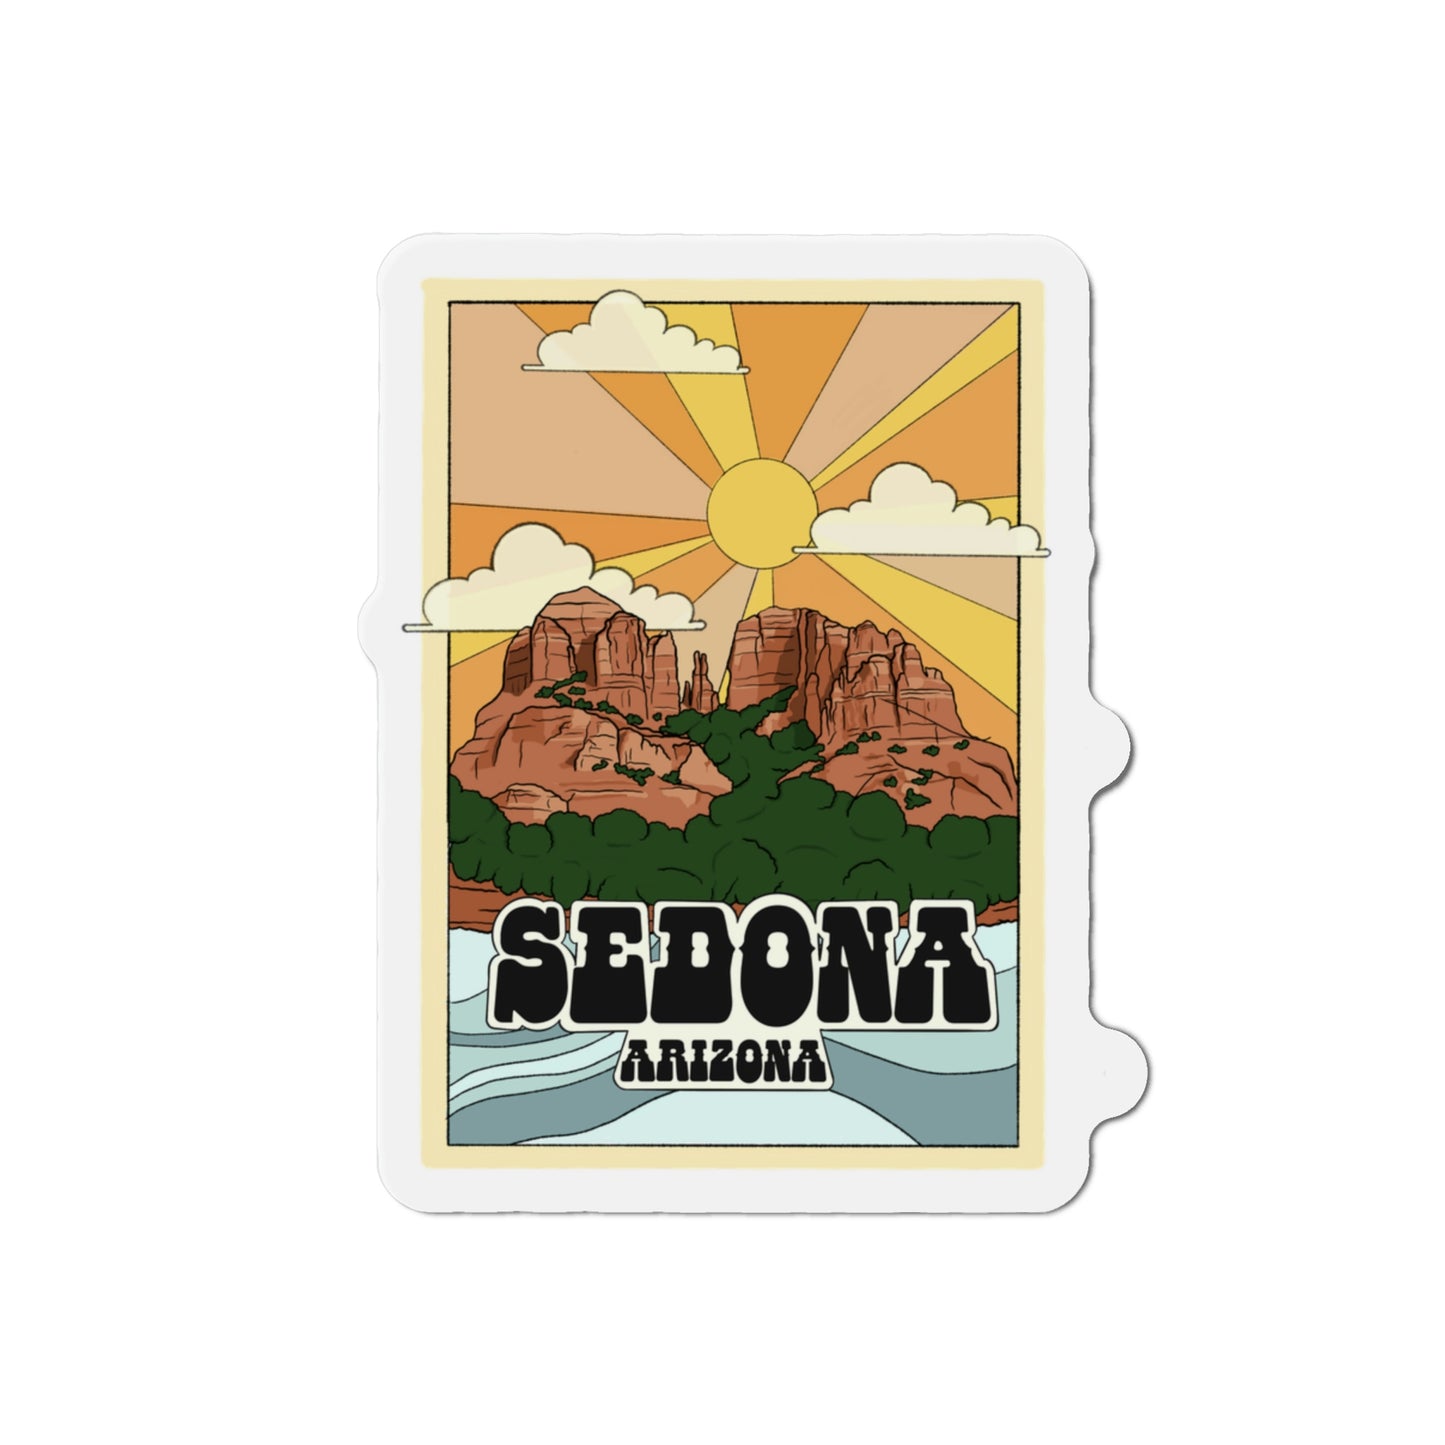 Sedona Vintage Magnet - redrockmerchco